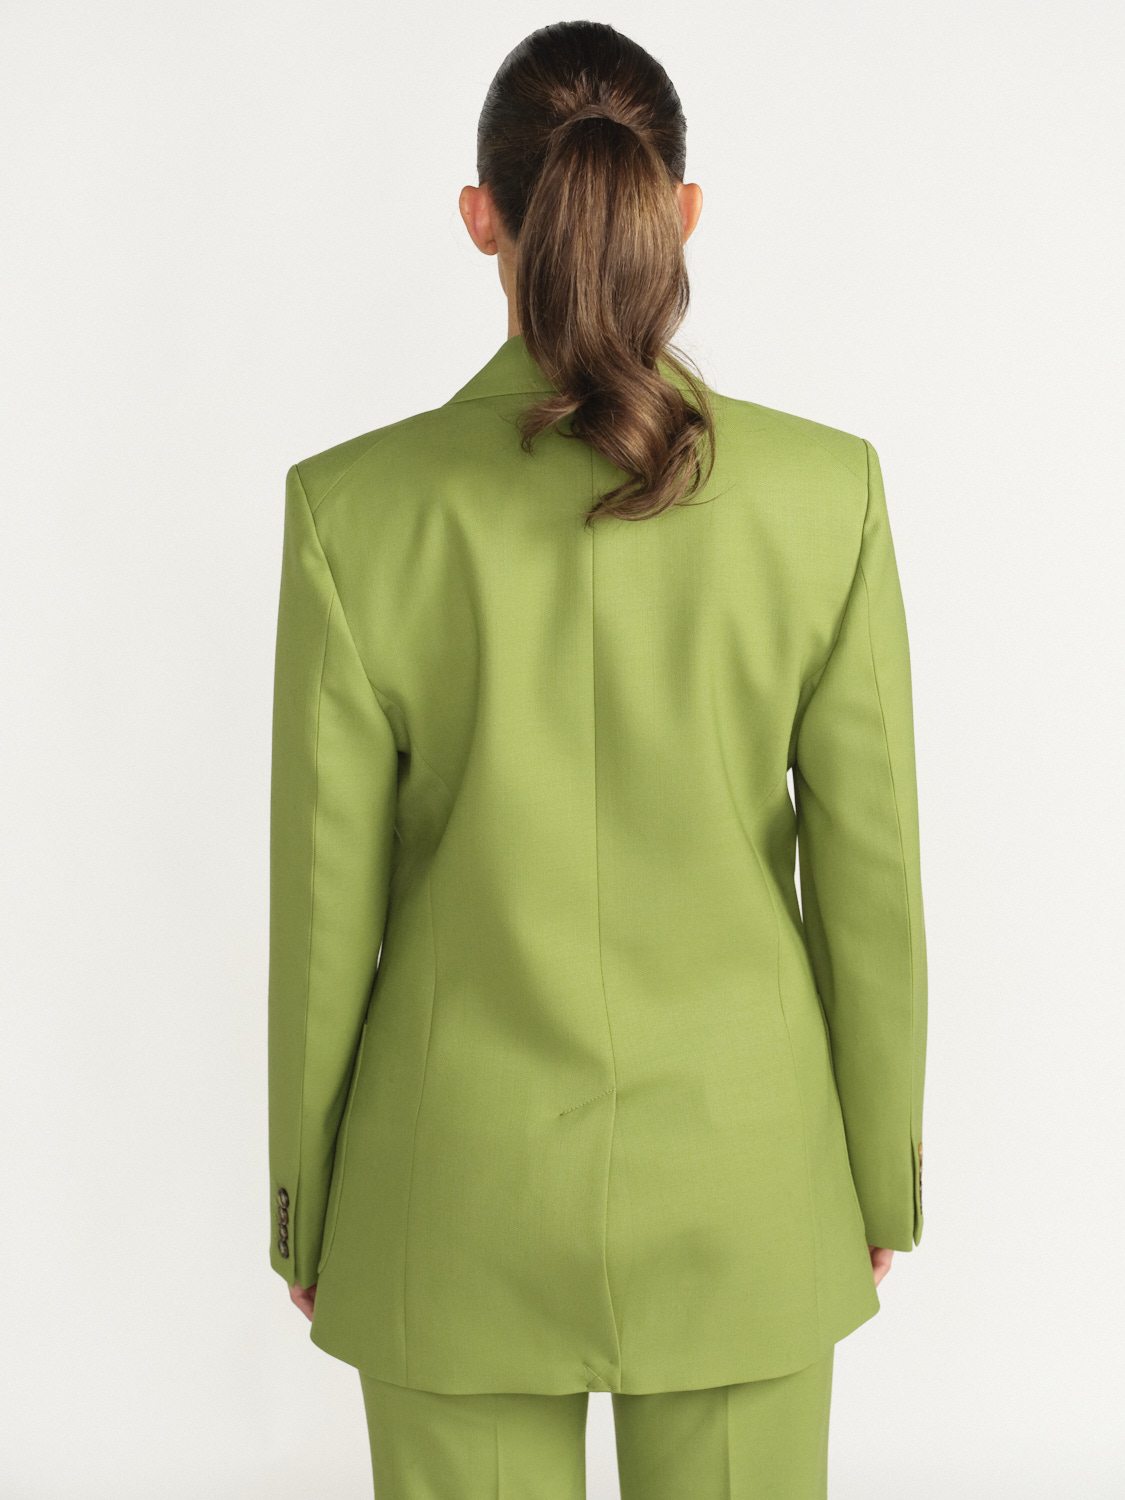 Victoria Beckham Patch Pocket - Classic blazer with patch pockets green 40